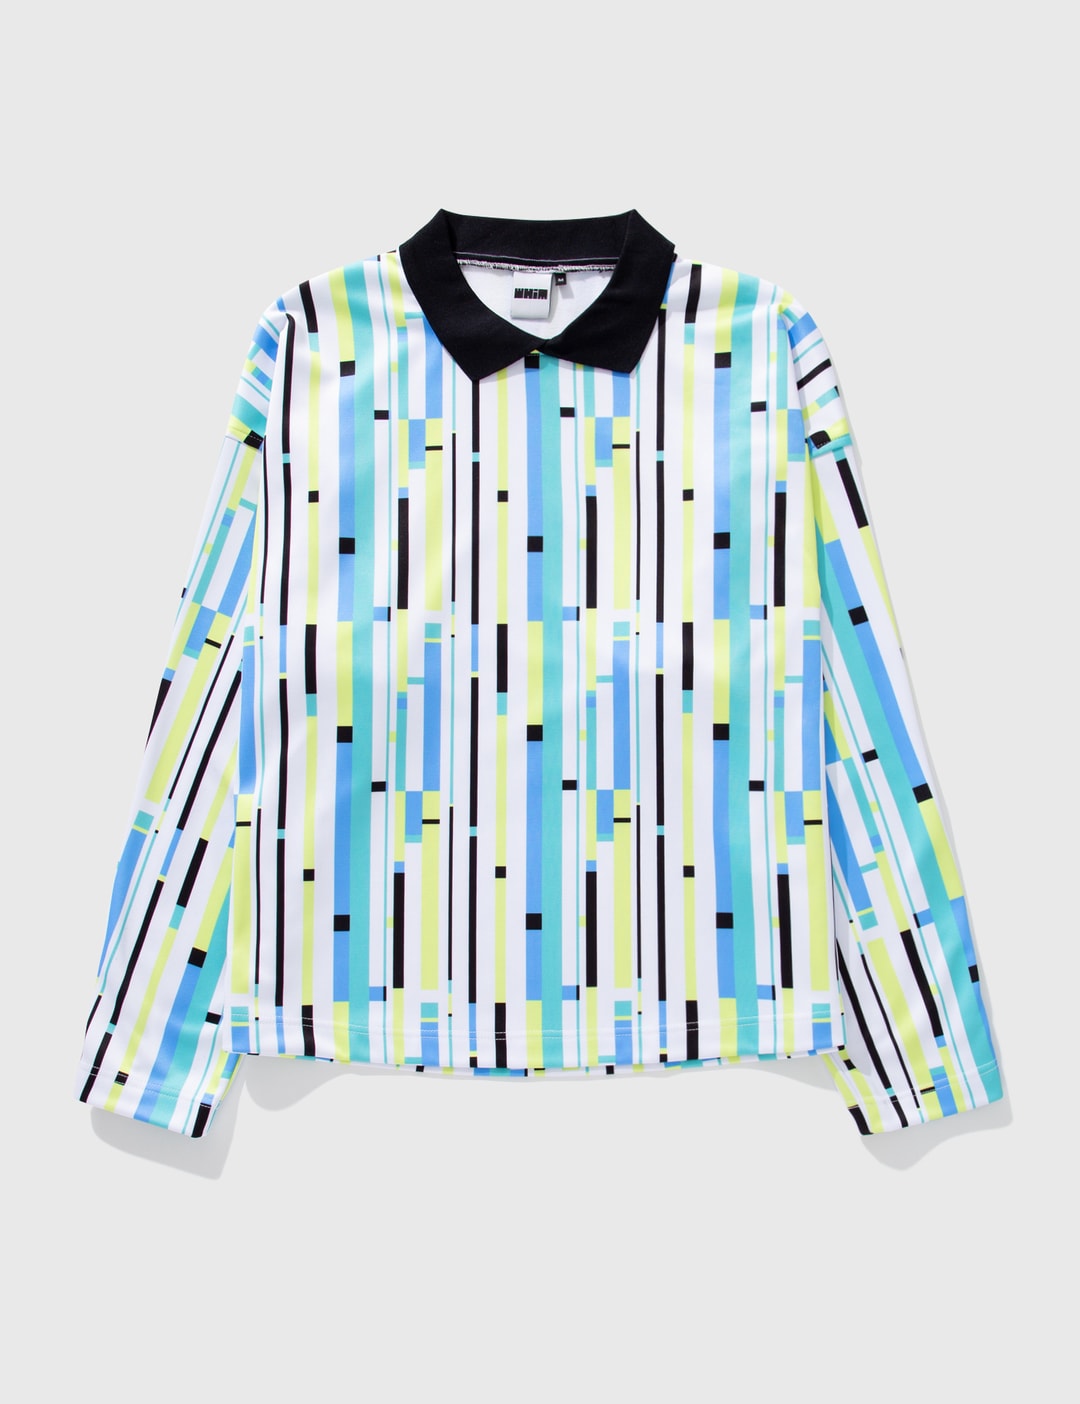 Brushed Polyester Collared Sweatshirt Placeholder Image